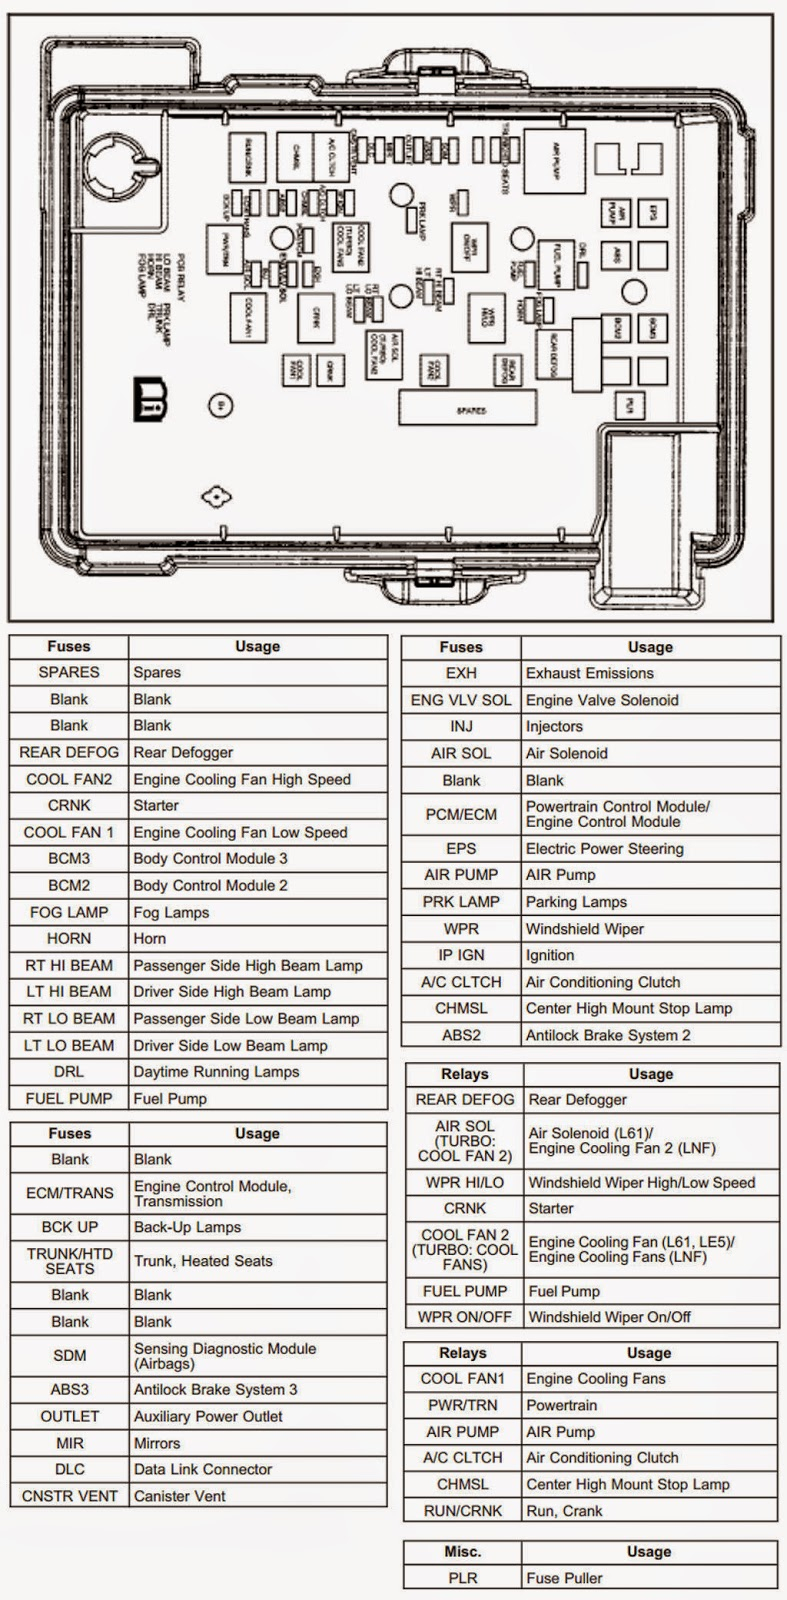 2010 Pt Cruiser Fuse Box Diagram | Wiring Library - 2006 Pt Cruiser Cooling Fan Wiring Diagram